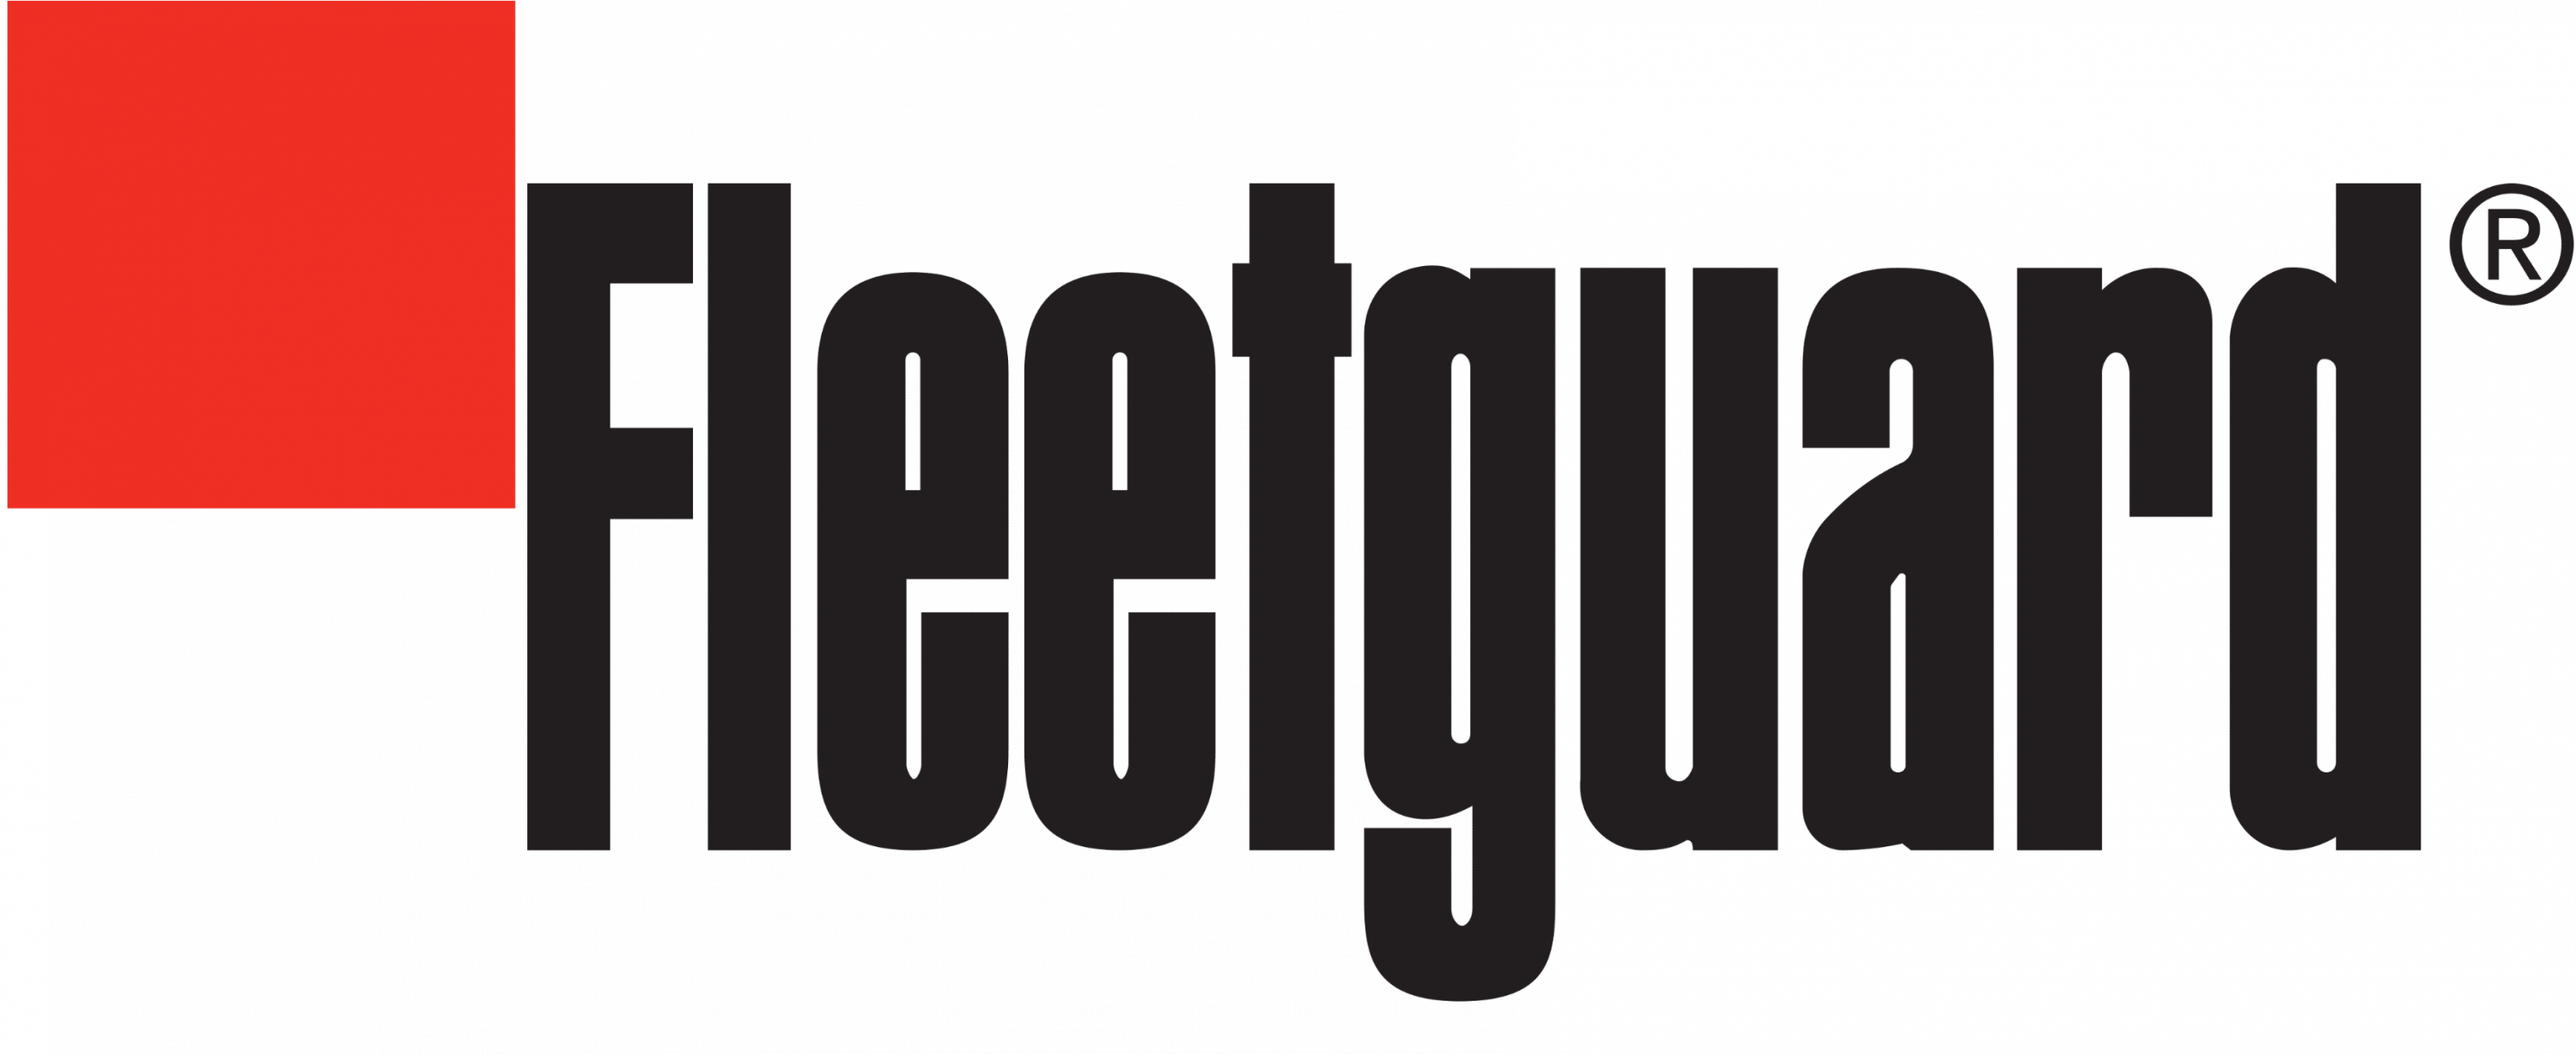 Fleetguard-logo